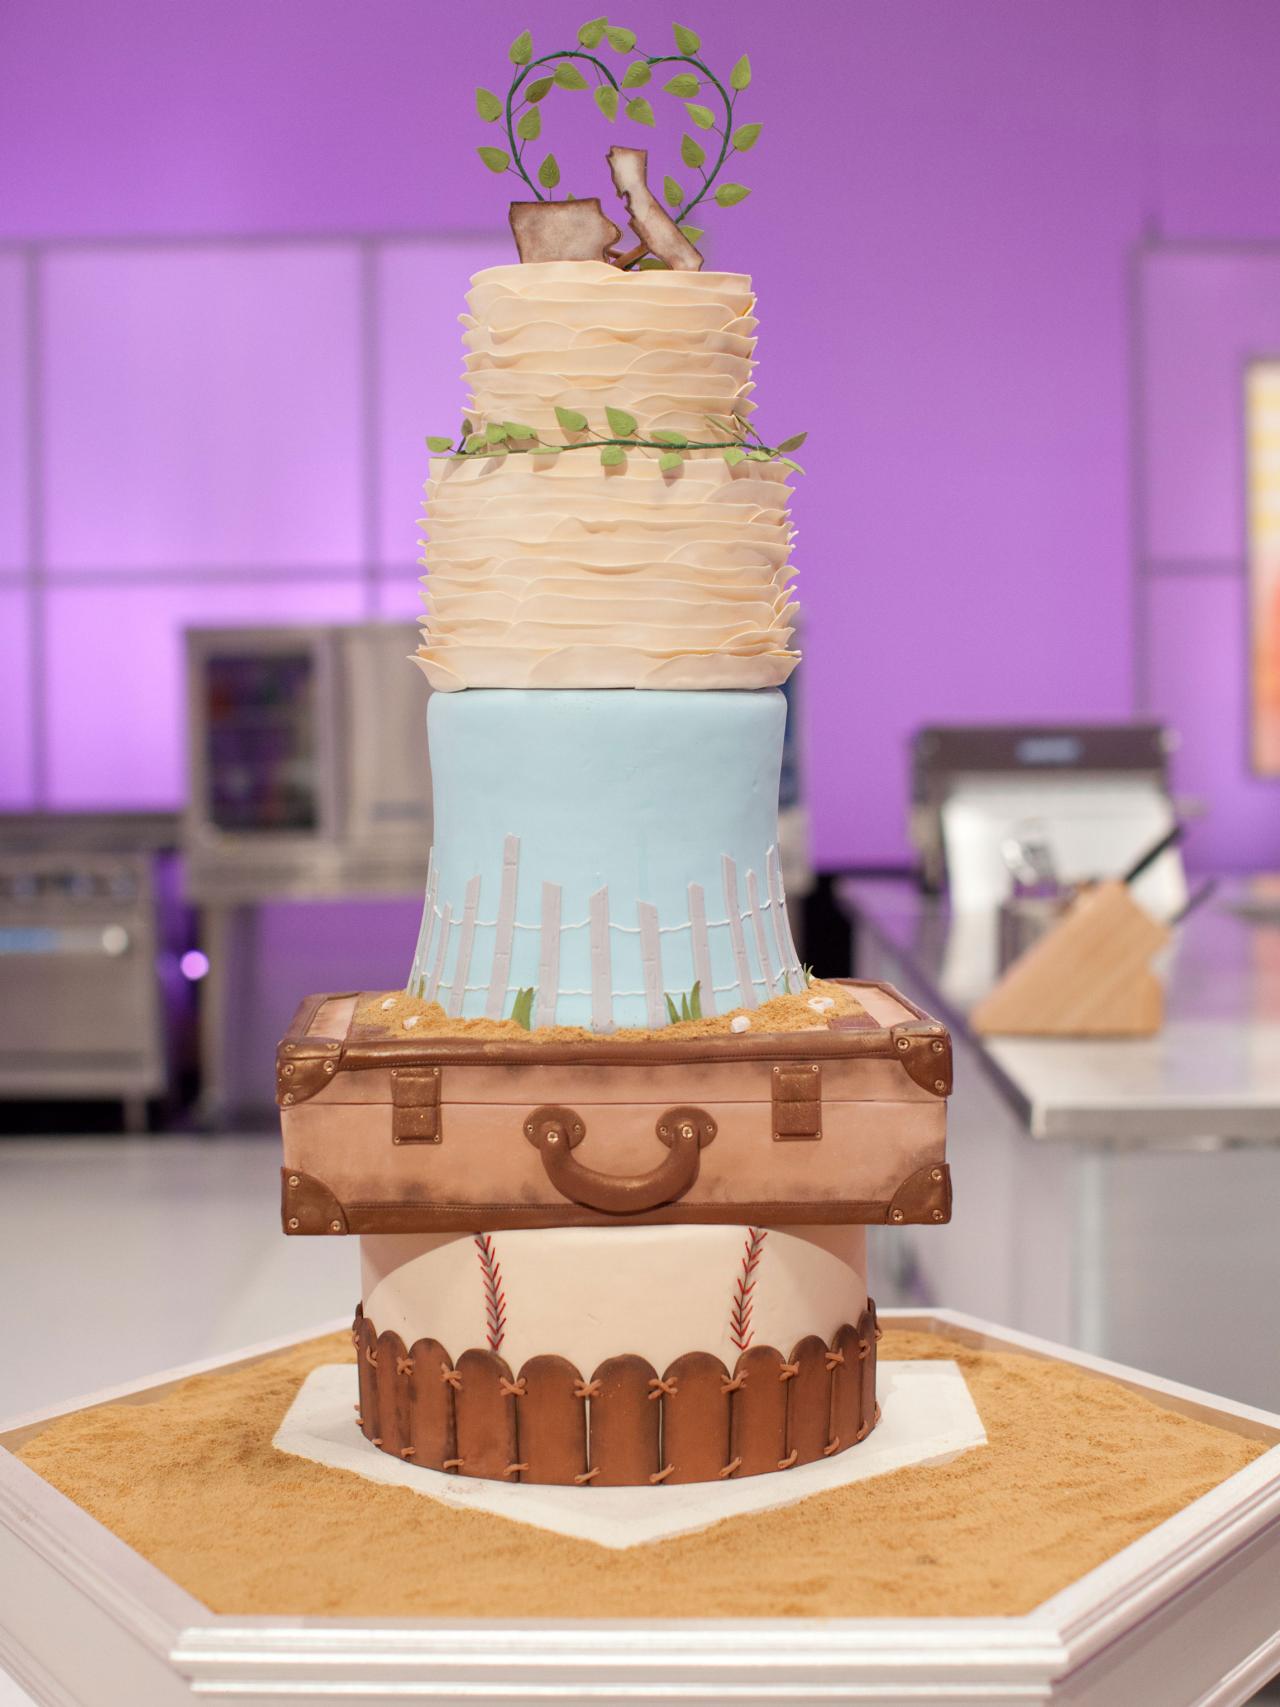 Buddy Makes a Vegas Themed Cake! | Cake Boss - YouTube